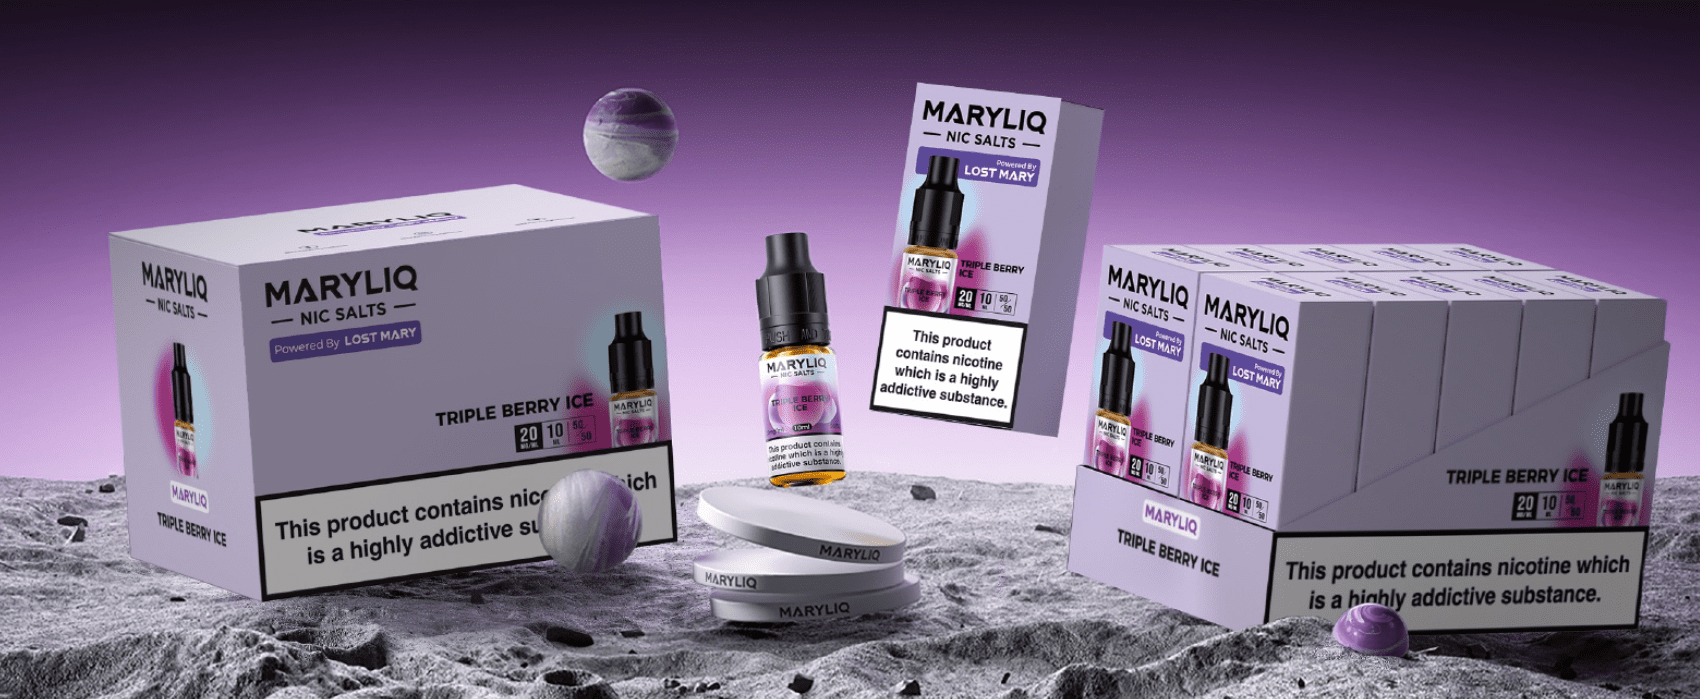 Maryliq product box and its box of 10